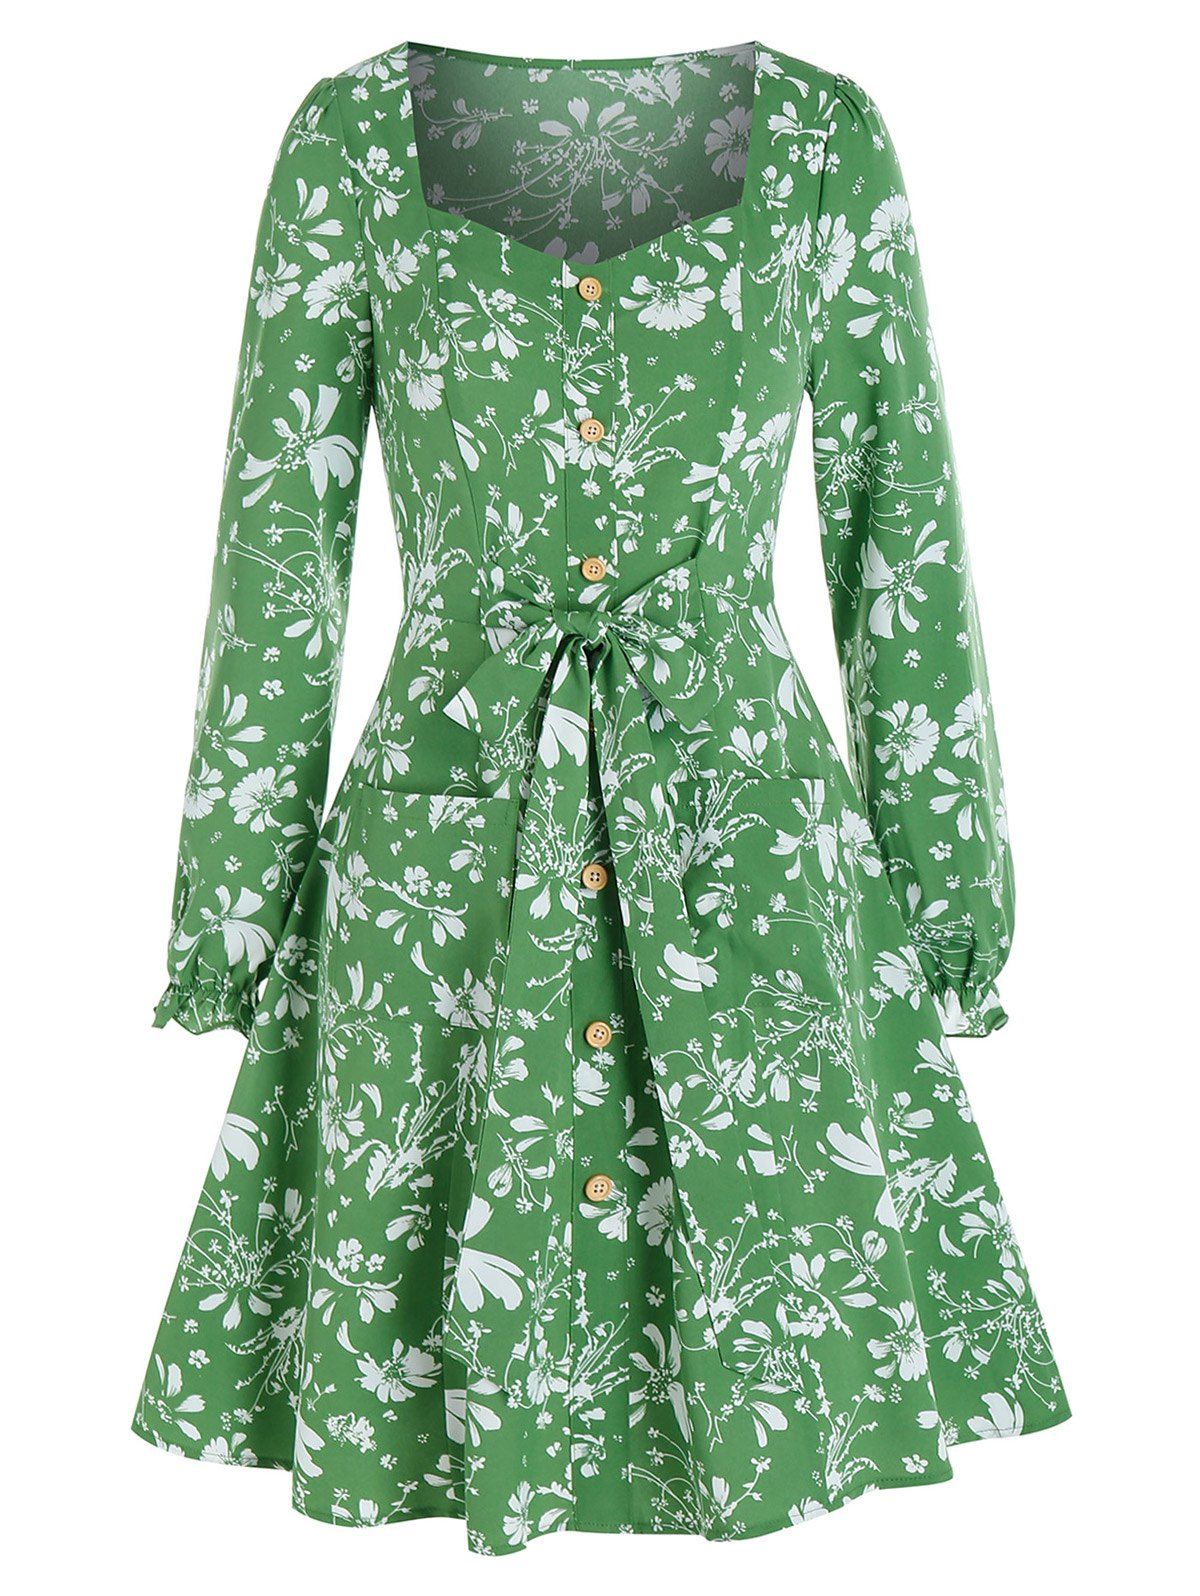 Ditsy Floral Pockets Mock Button Mini A Line Dress - LIGHT GREEN XL